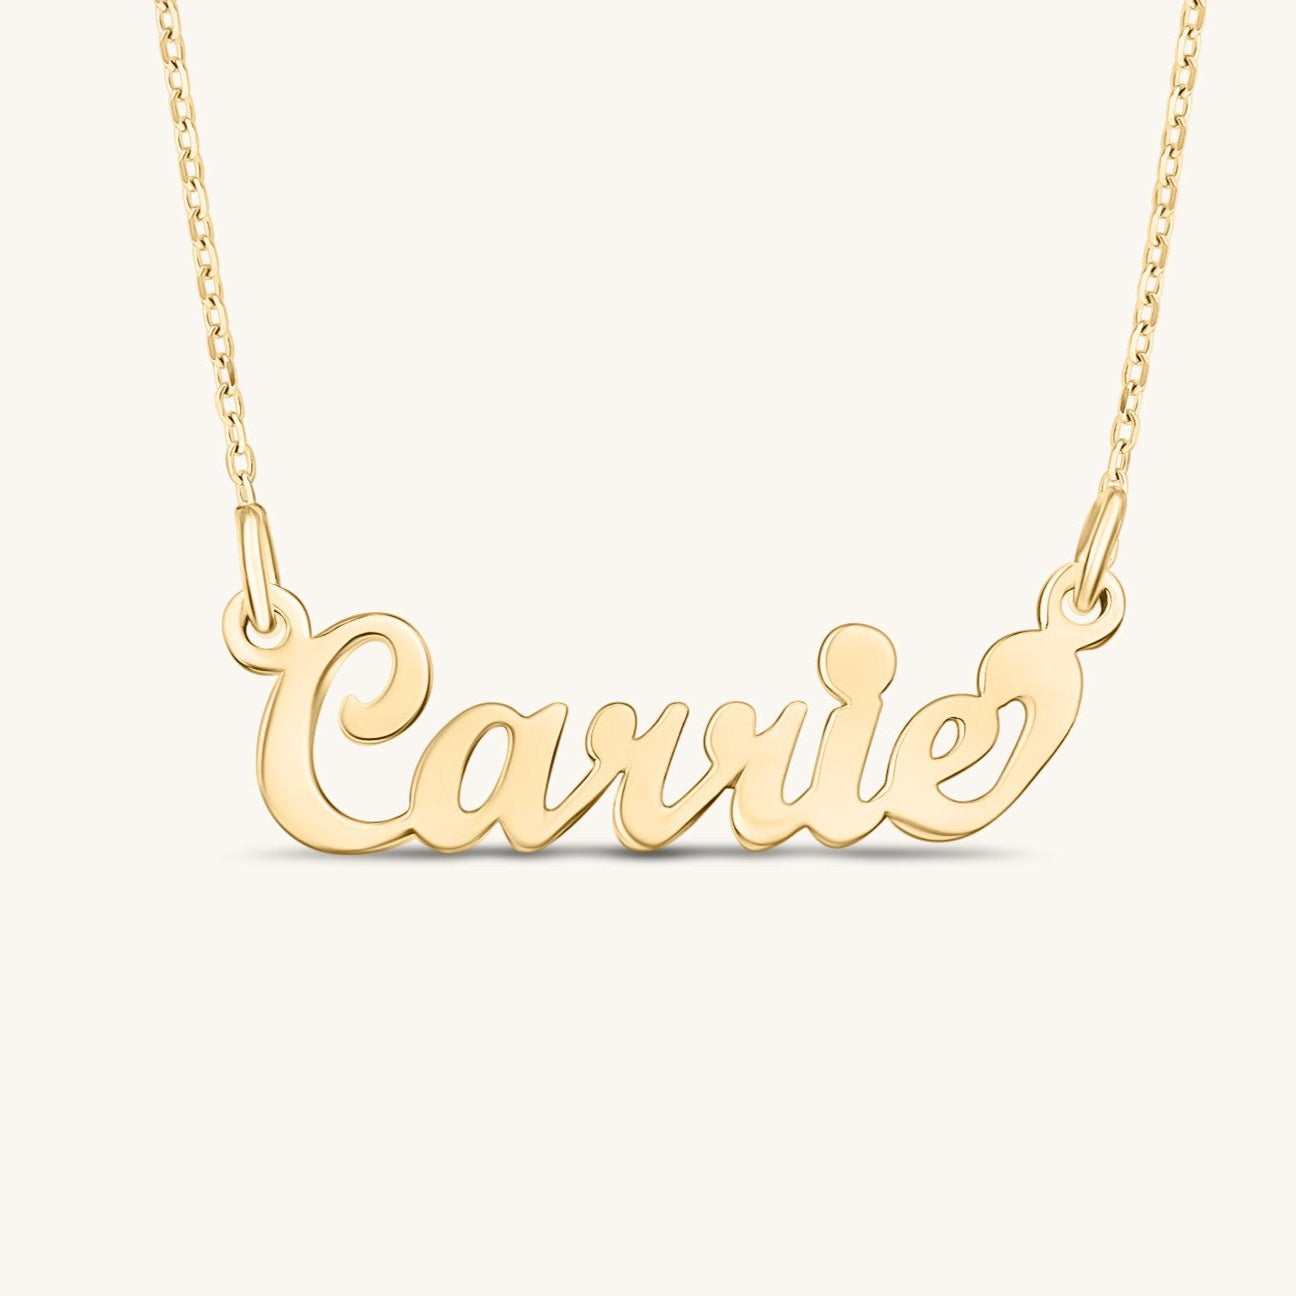 Cursive Script Carrie Nameplate Necklace - Keepsakes